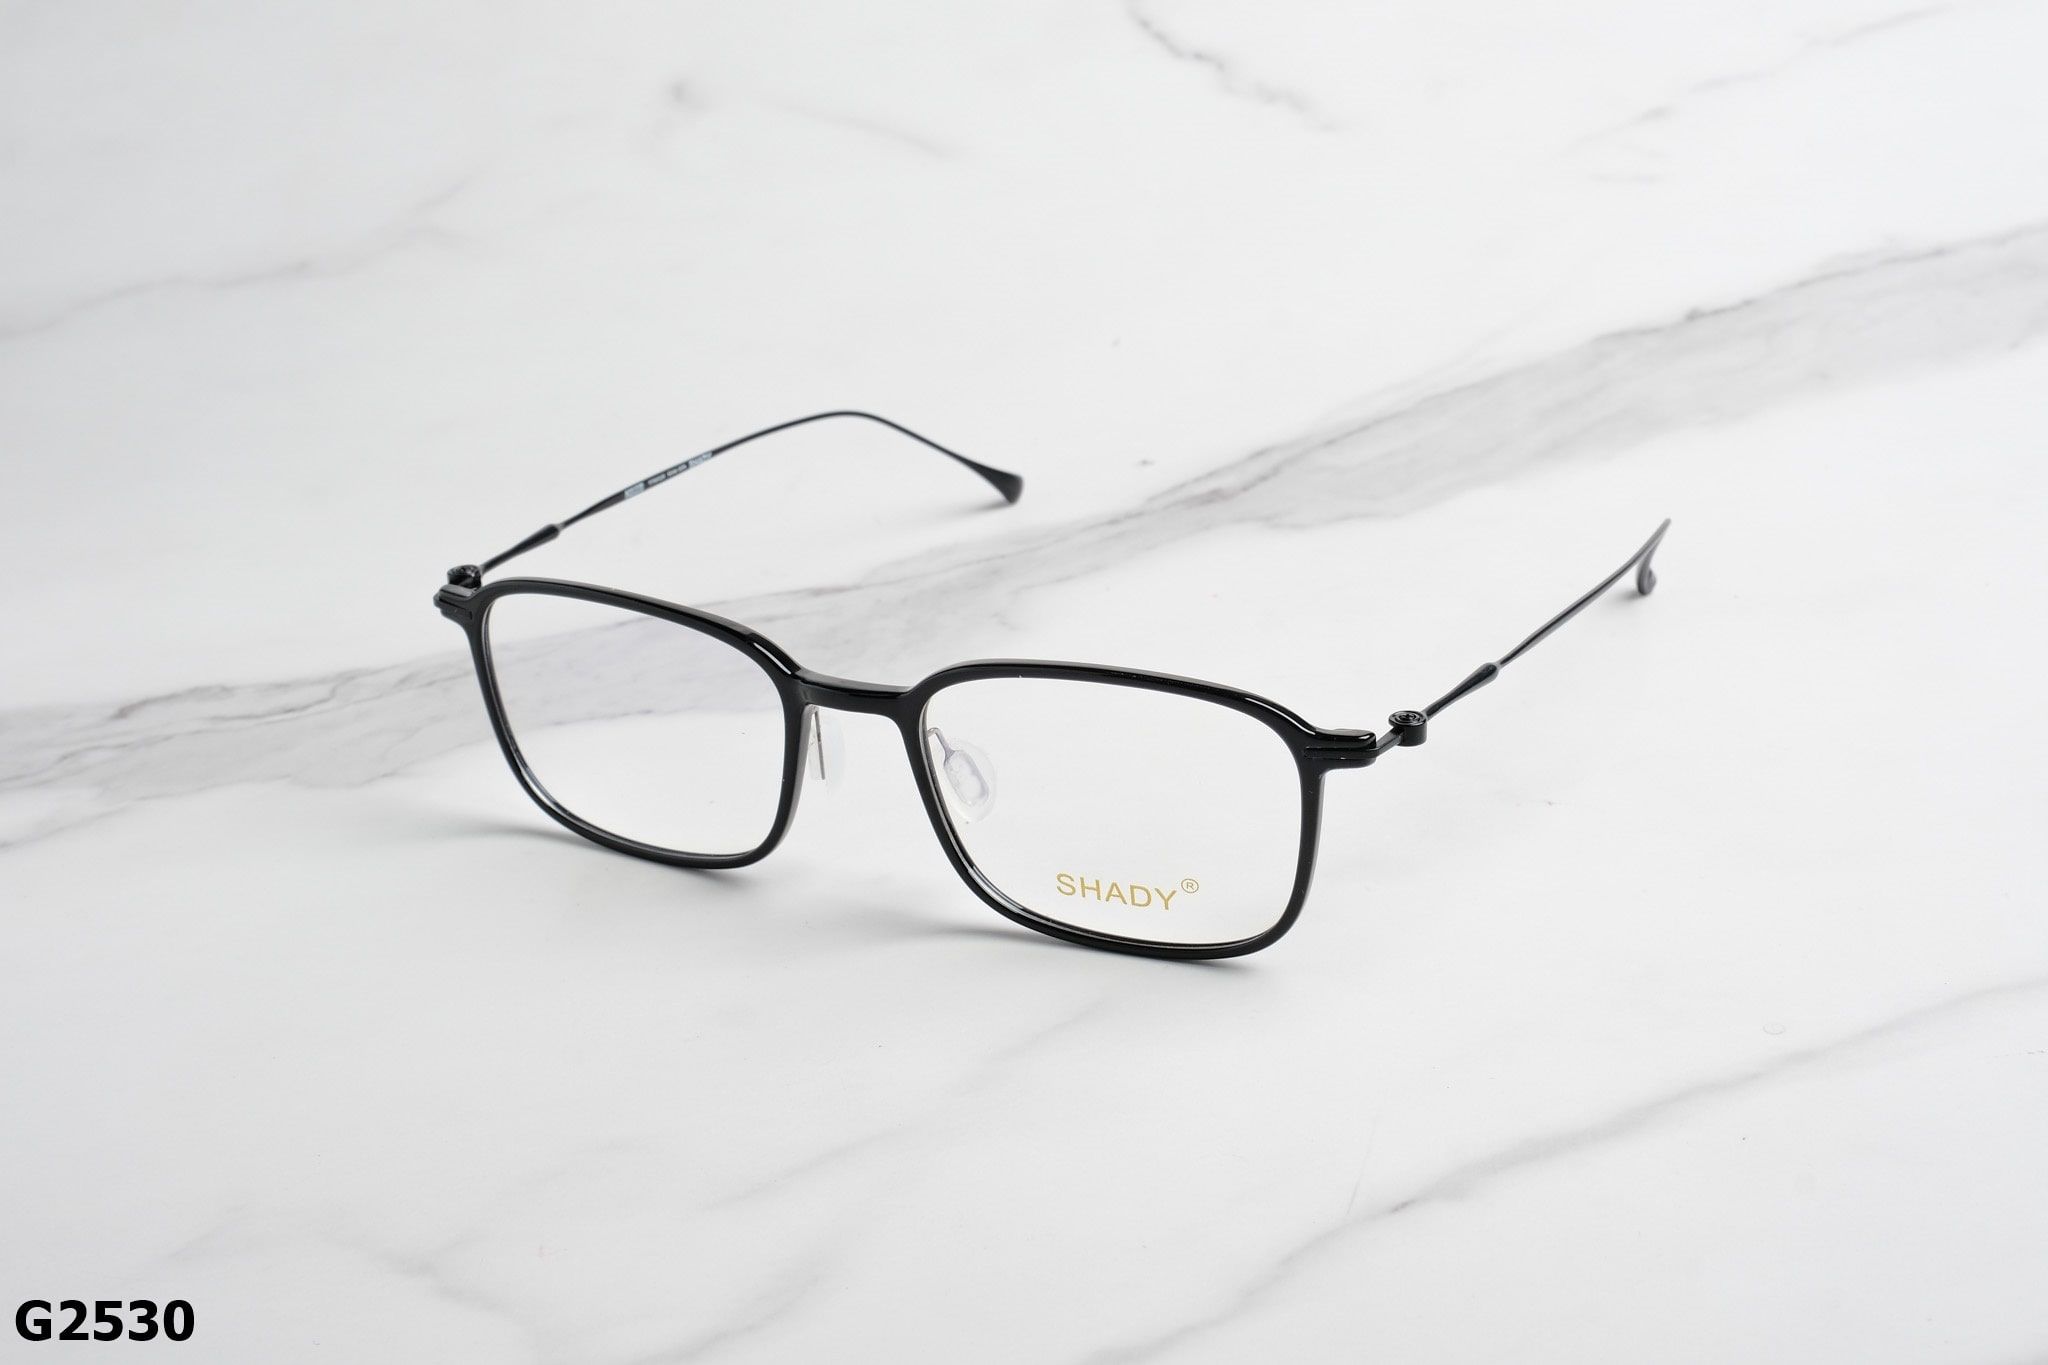  SHADY Eyewear - Glasses - G2530 